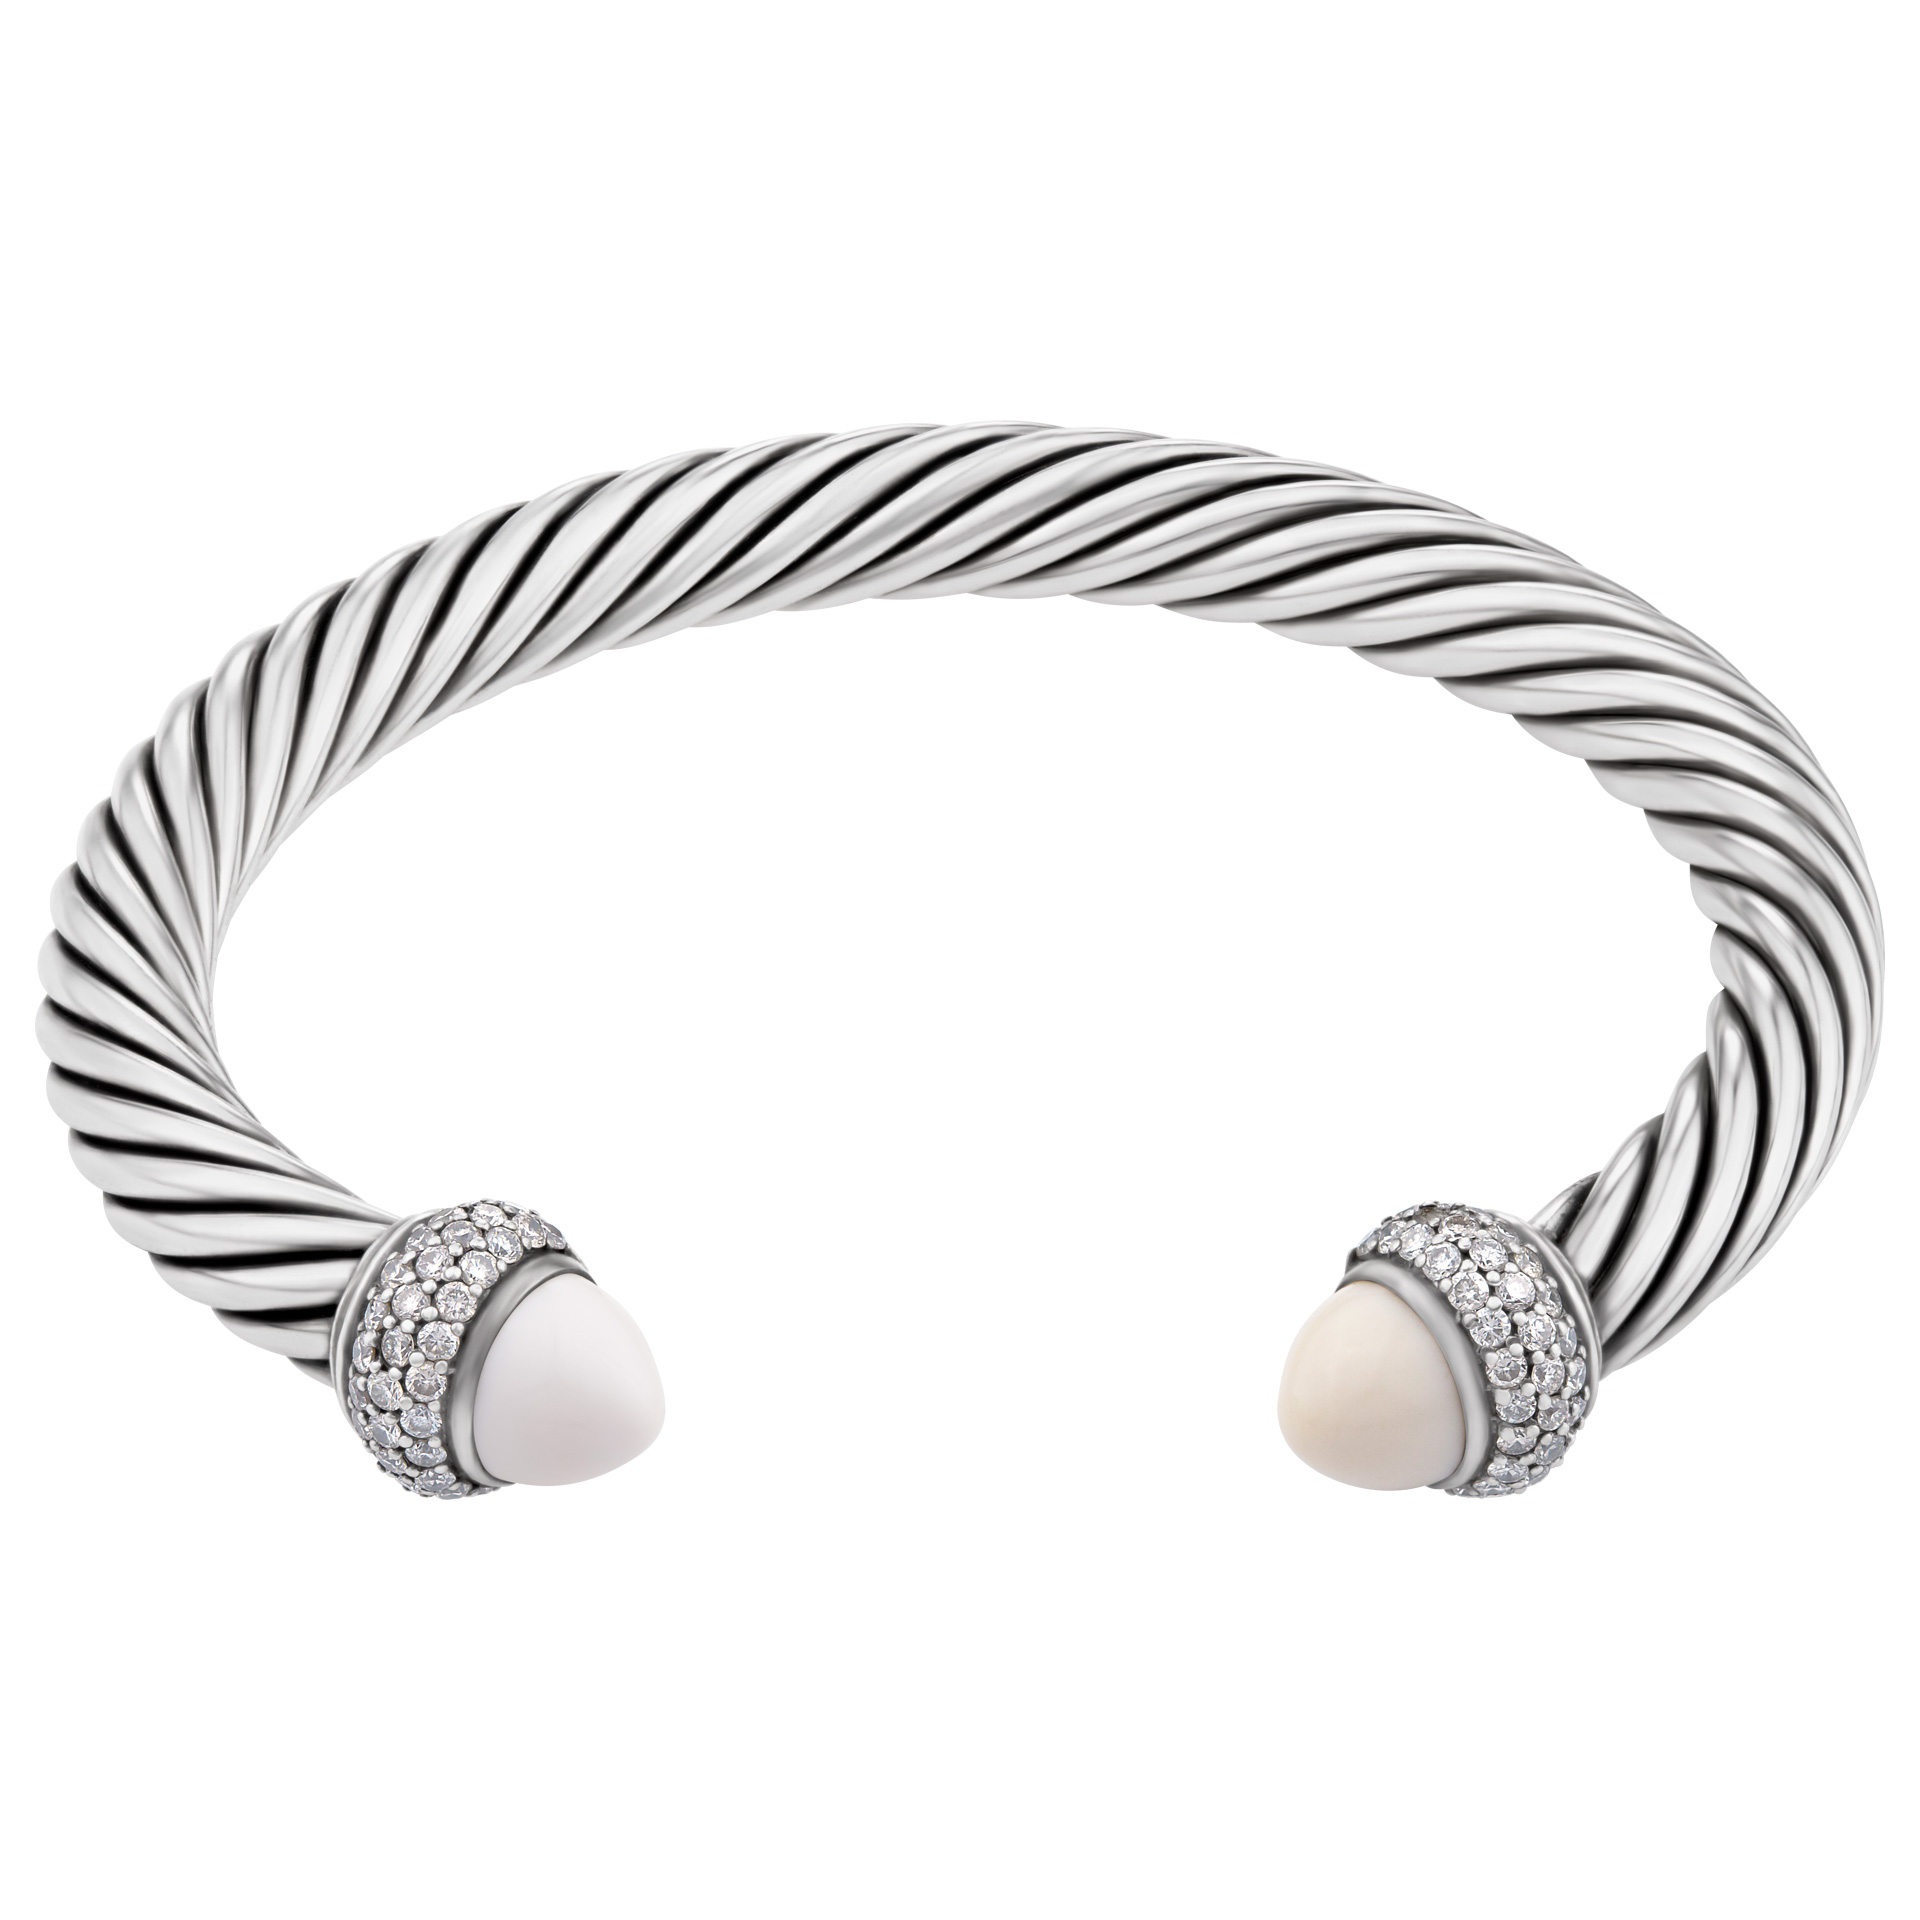 David Yurman Cable Classics Bracelet With Moon Quartz And Diamonds image 1